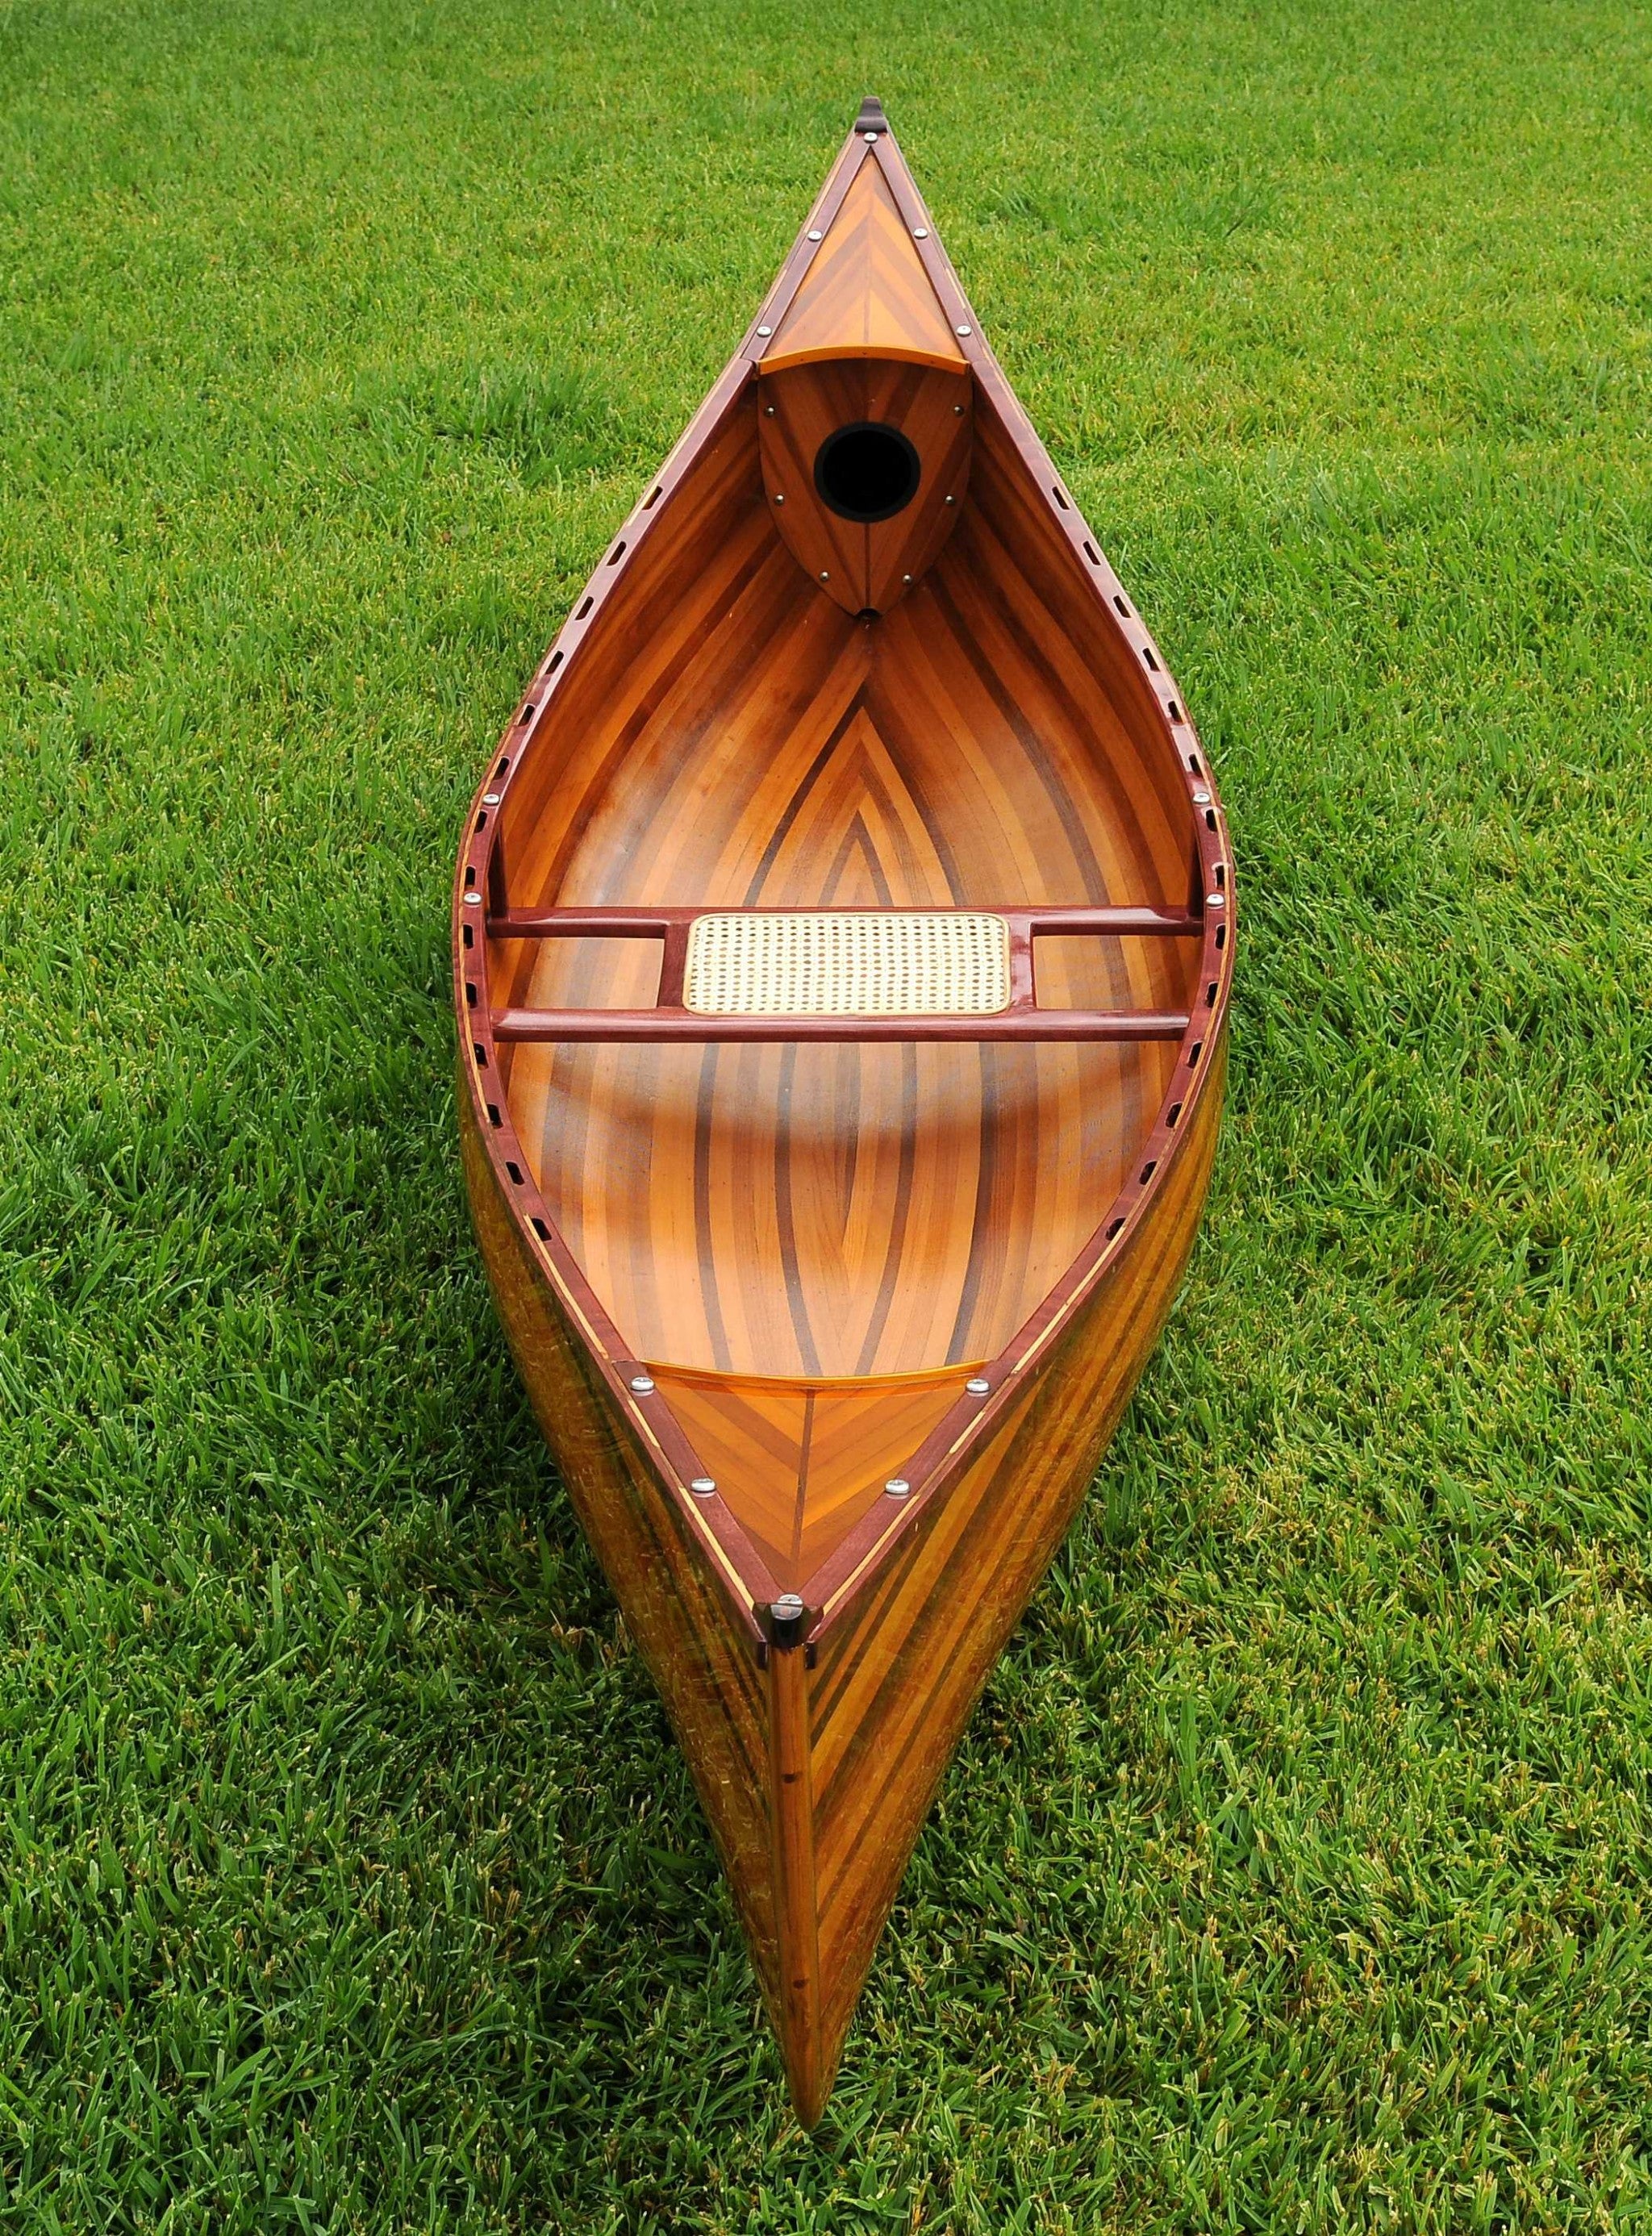 26.25" X 118.5" X 16" Wooden Canoe